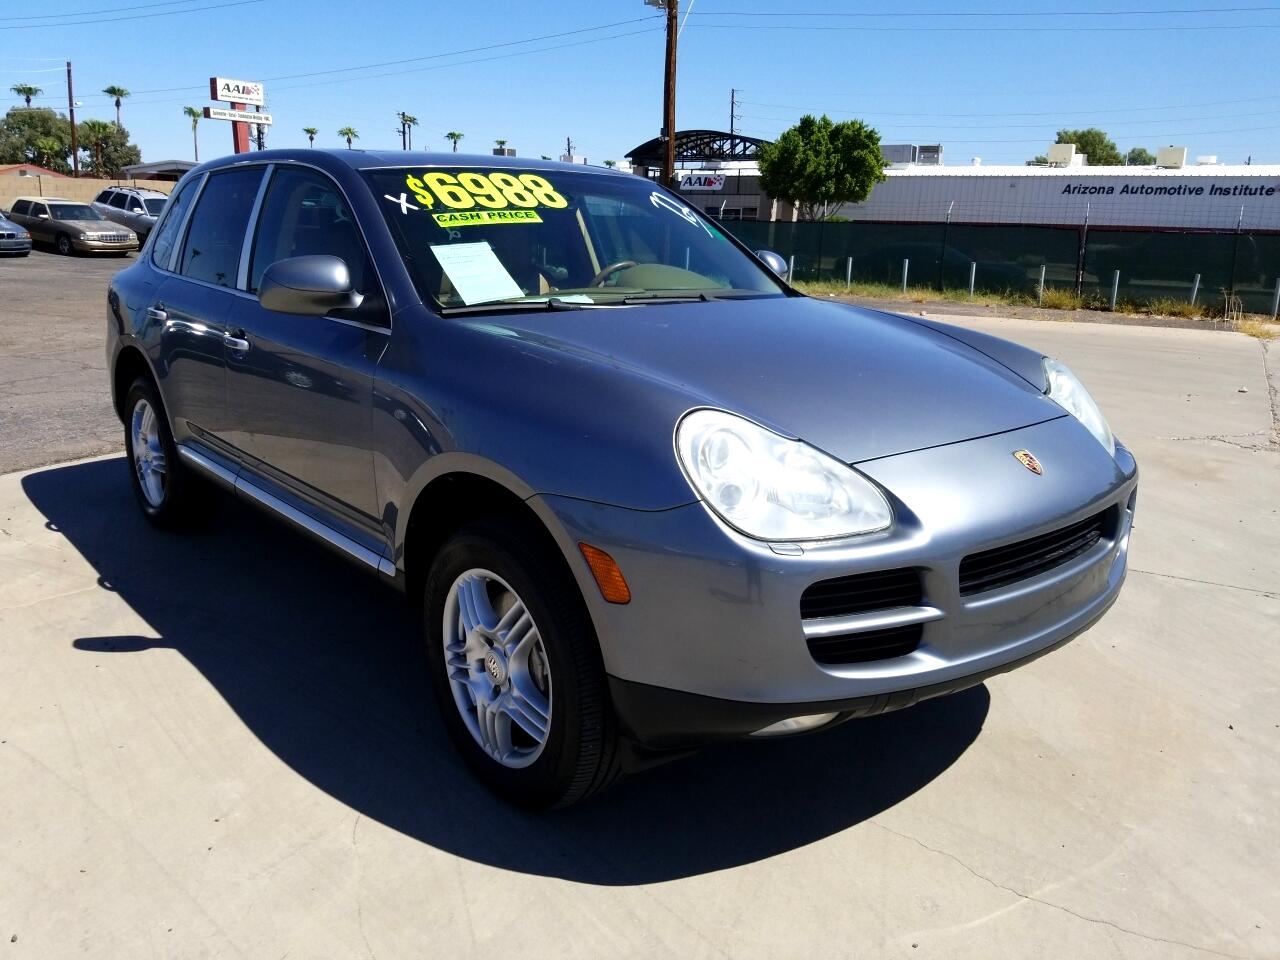 Used 2004 Porsche Cayenne S for Sale in Phoenix AZ 85301